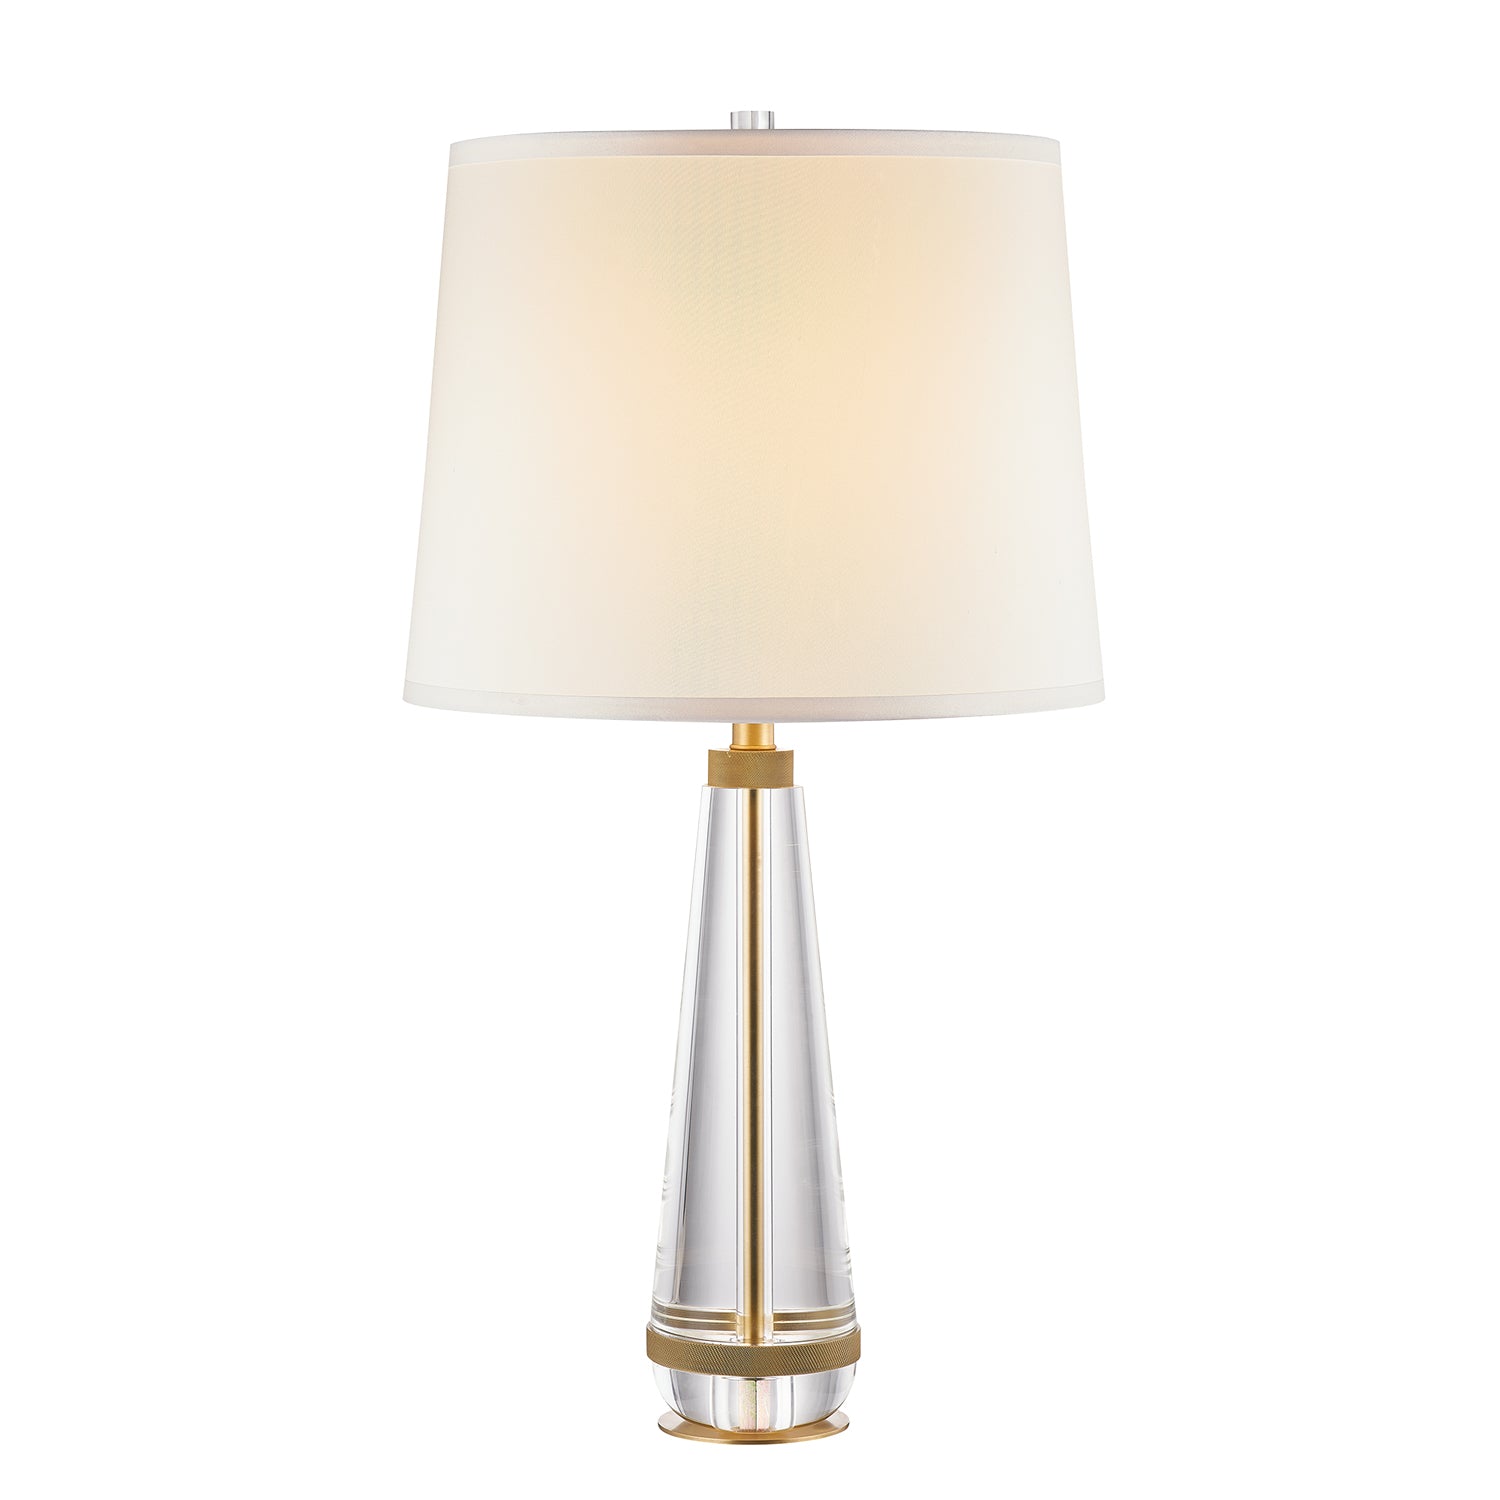 Calista Table lamp Gold - TL315229VBWS | Alora